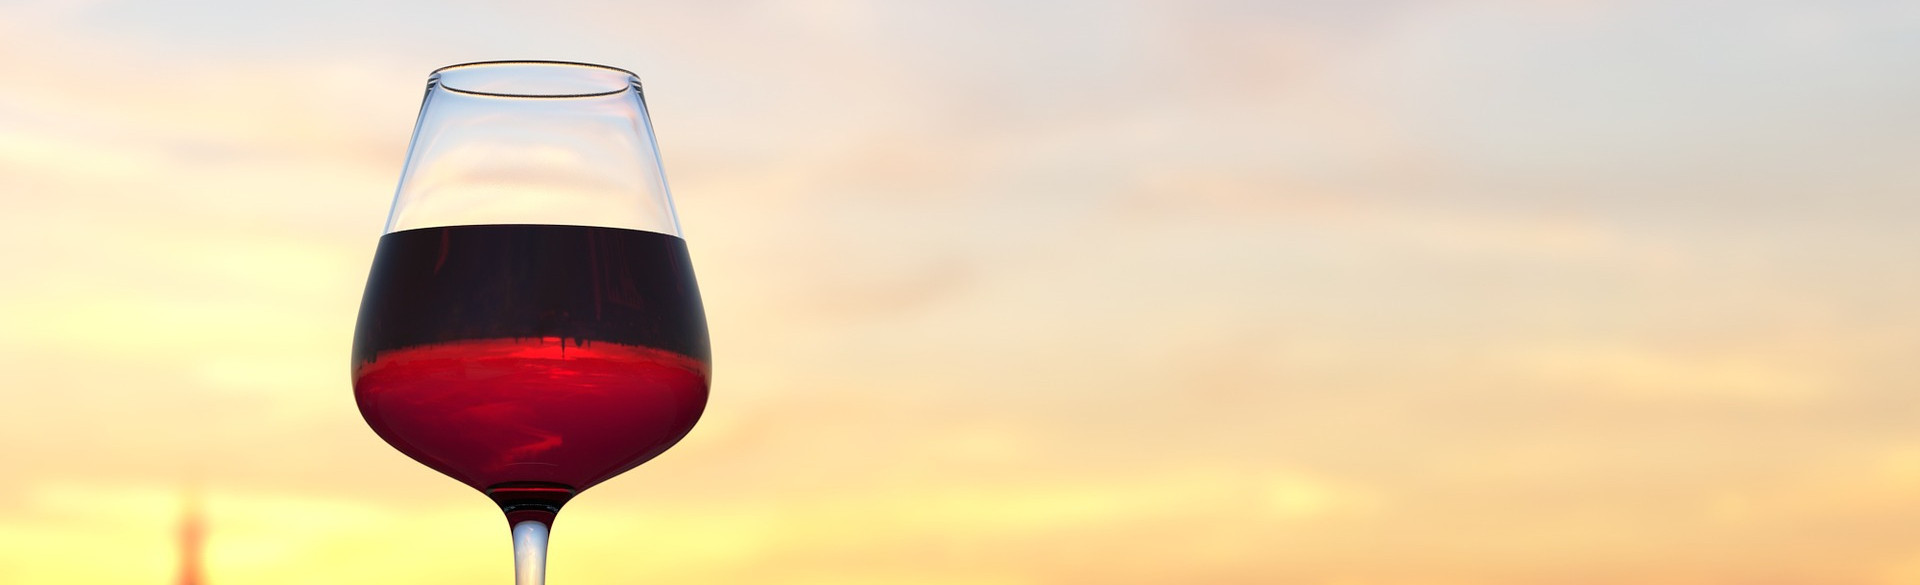 Rotweinglas bei Sonnenuntergang